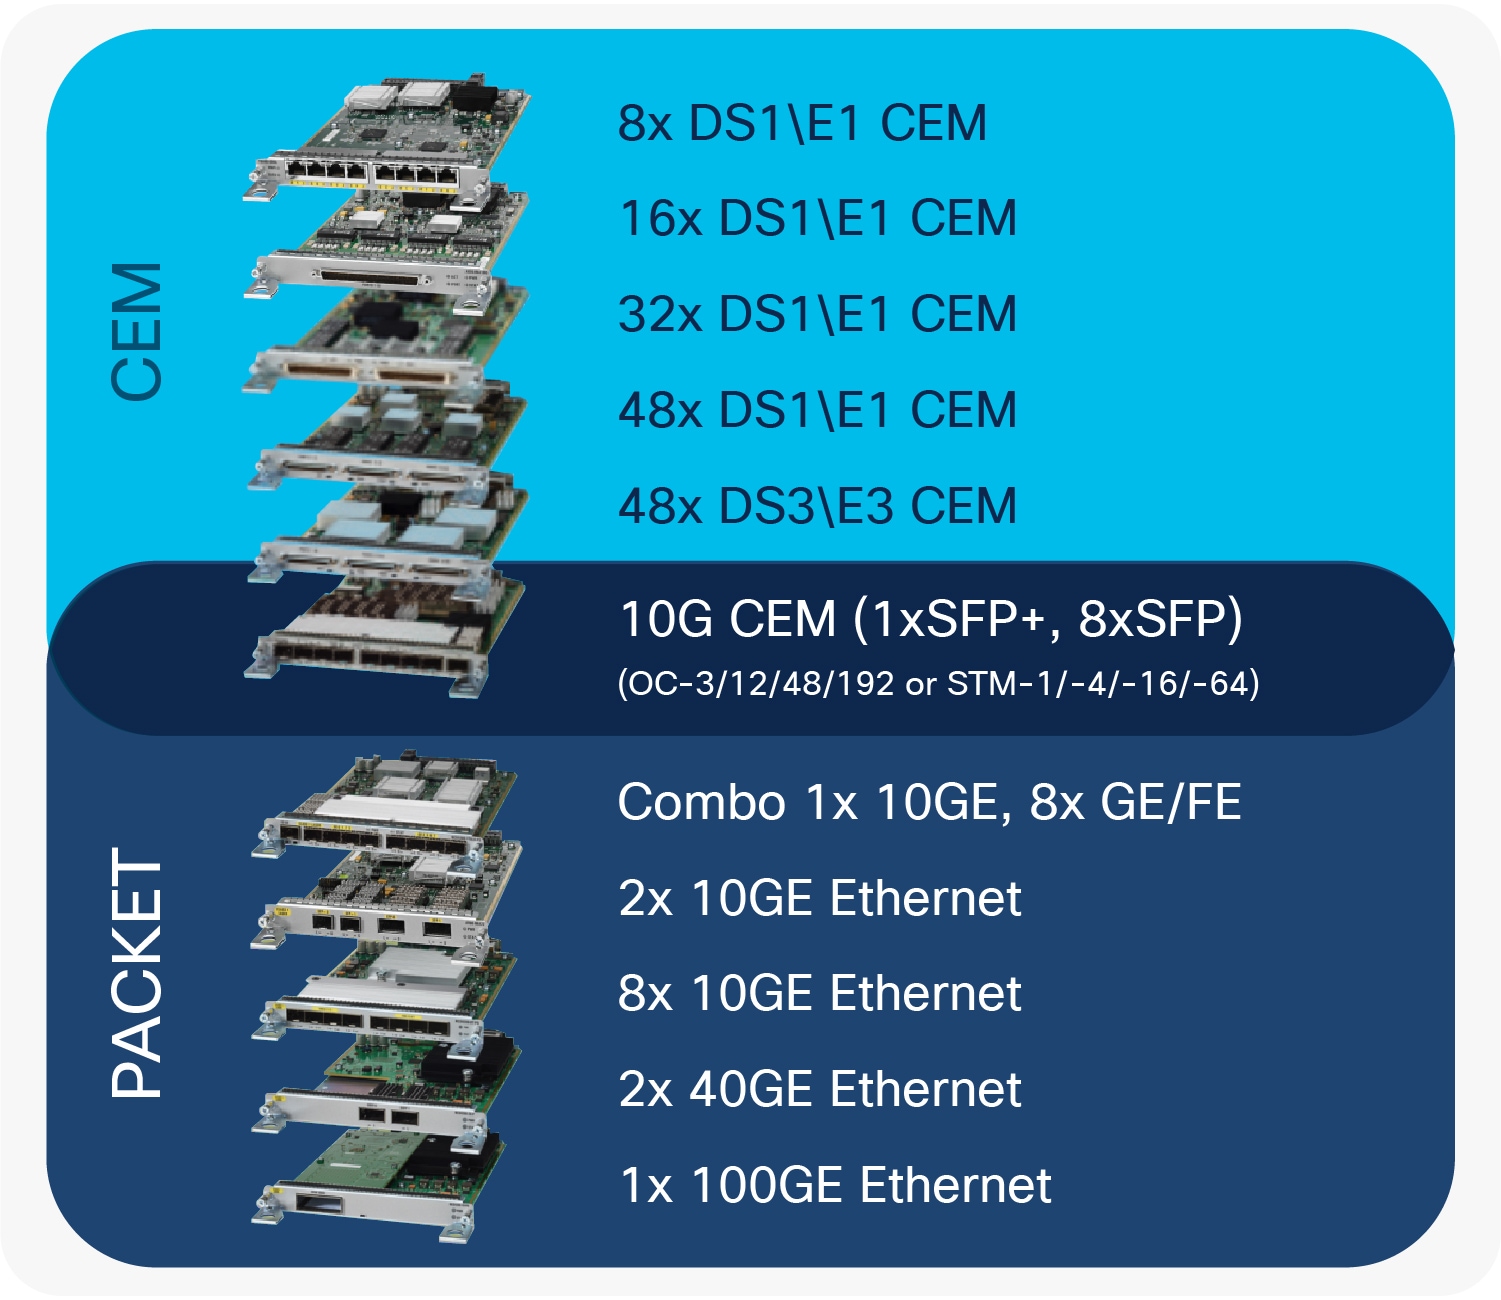 Cisco ASR 900 Series interface modules